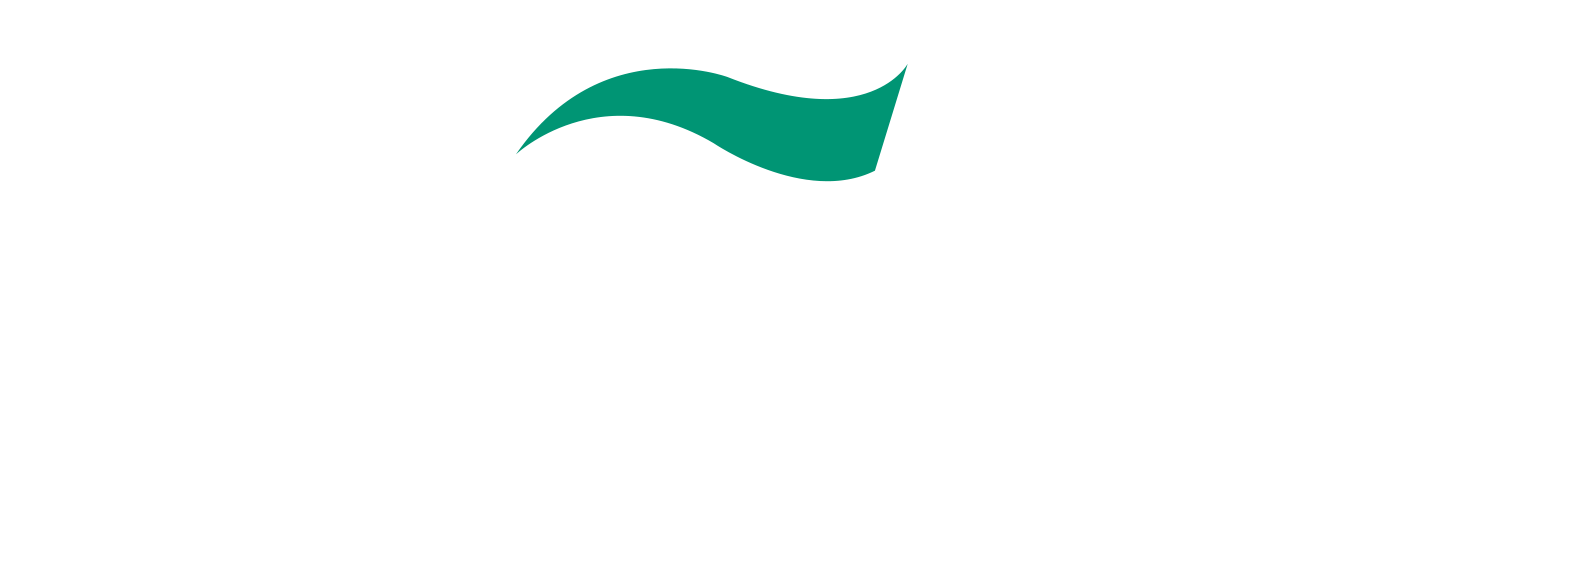 Tower Supplies Logo